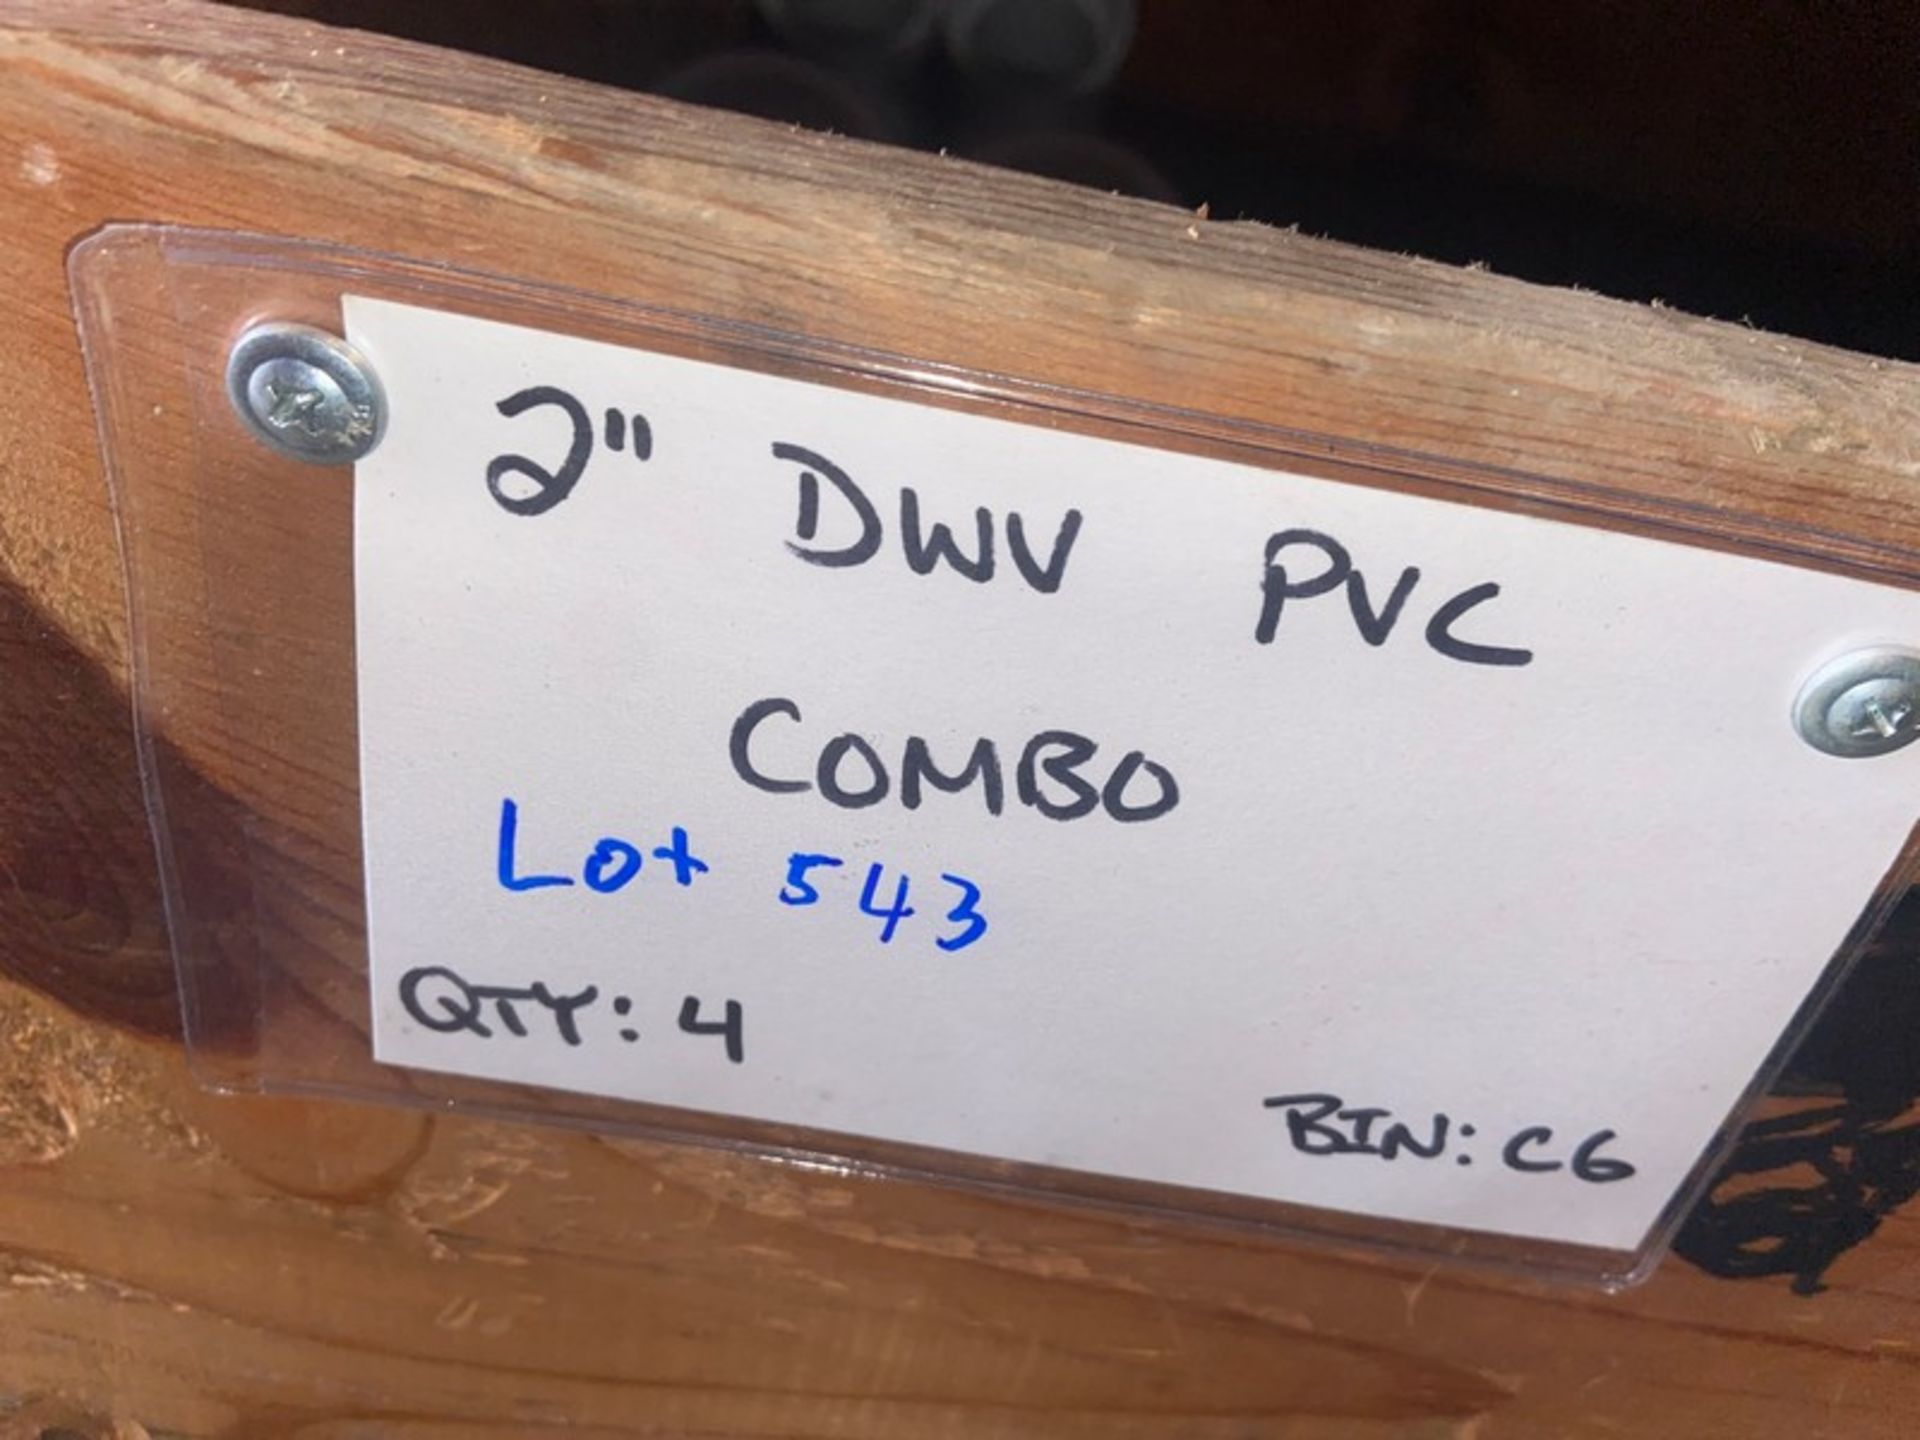 (4) 2” DWV PVC COMBO (Bin:C6); (2) DWV PVC TEE (Bin:C6) (LOCATED IN MONROEVILLE, PA) - Image 4 of 8